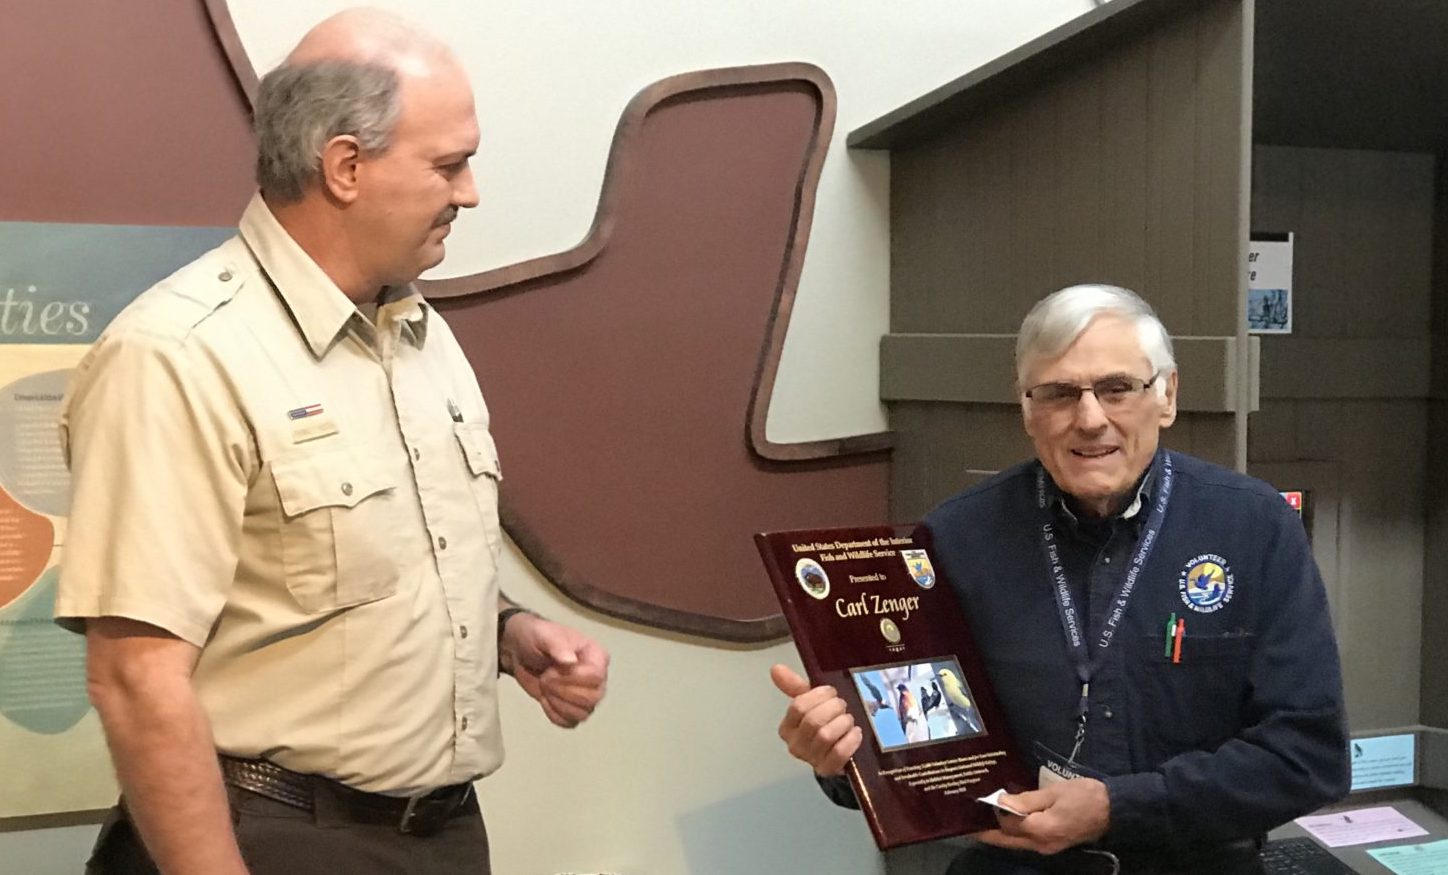 Carl Zenger hits 35,000 hour milestone volunteering at INWR